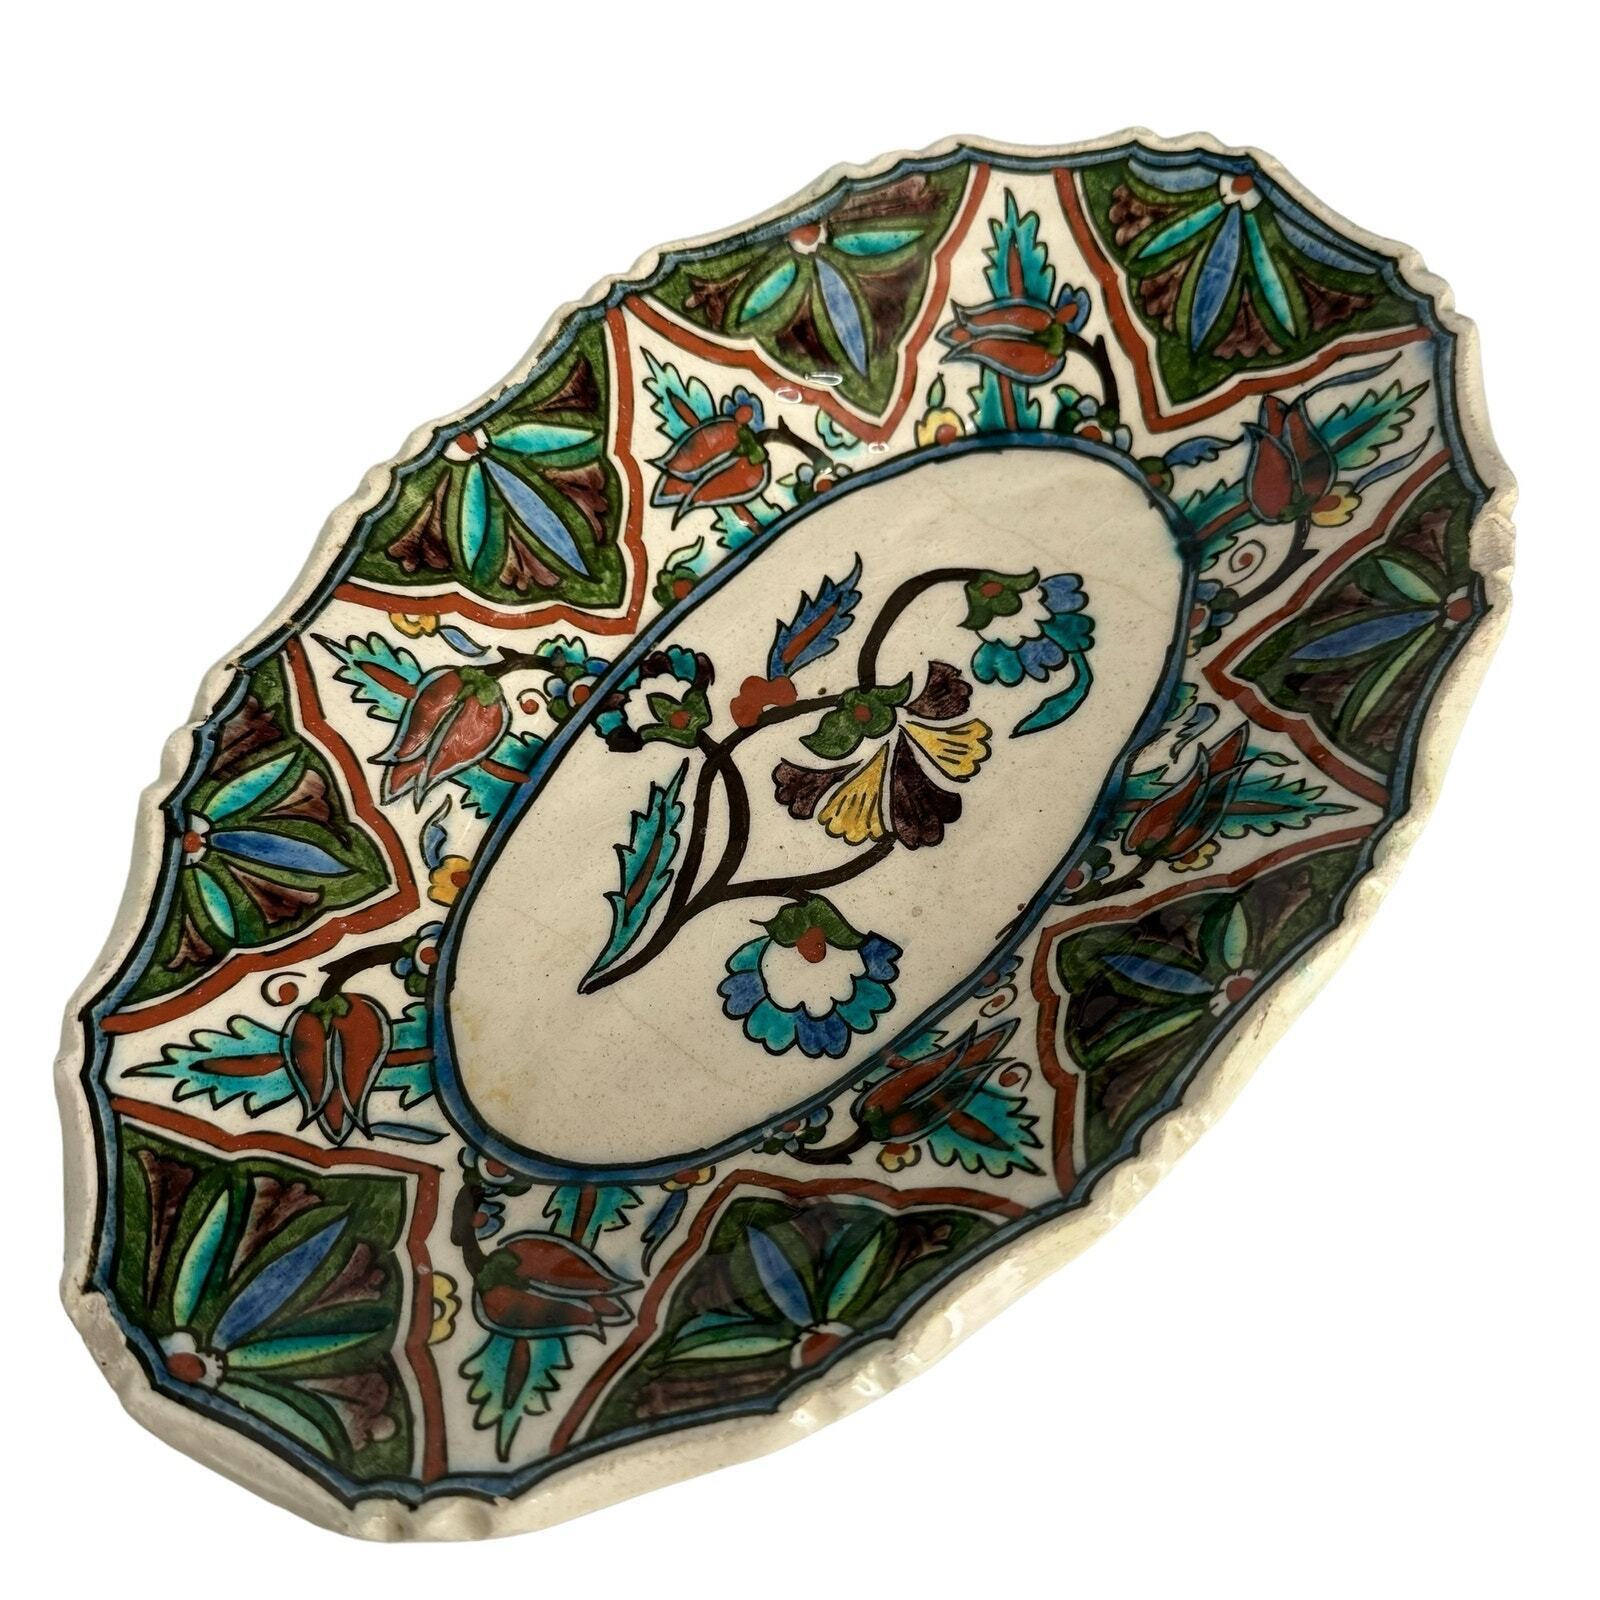 Ottoman Iznik Pottery Oval Dish Platter Antique Vintage Persian Islamic Turkish